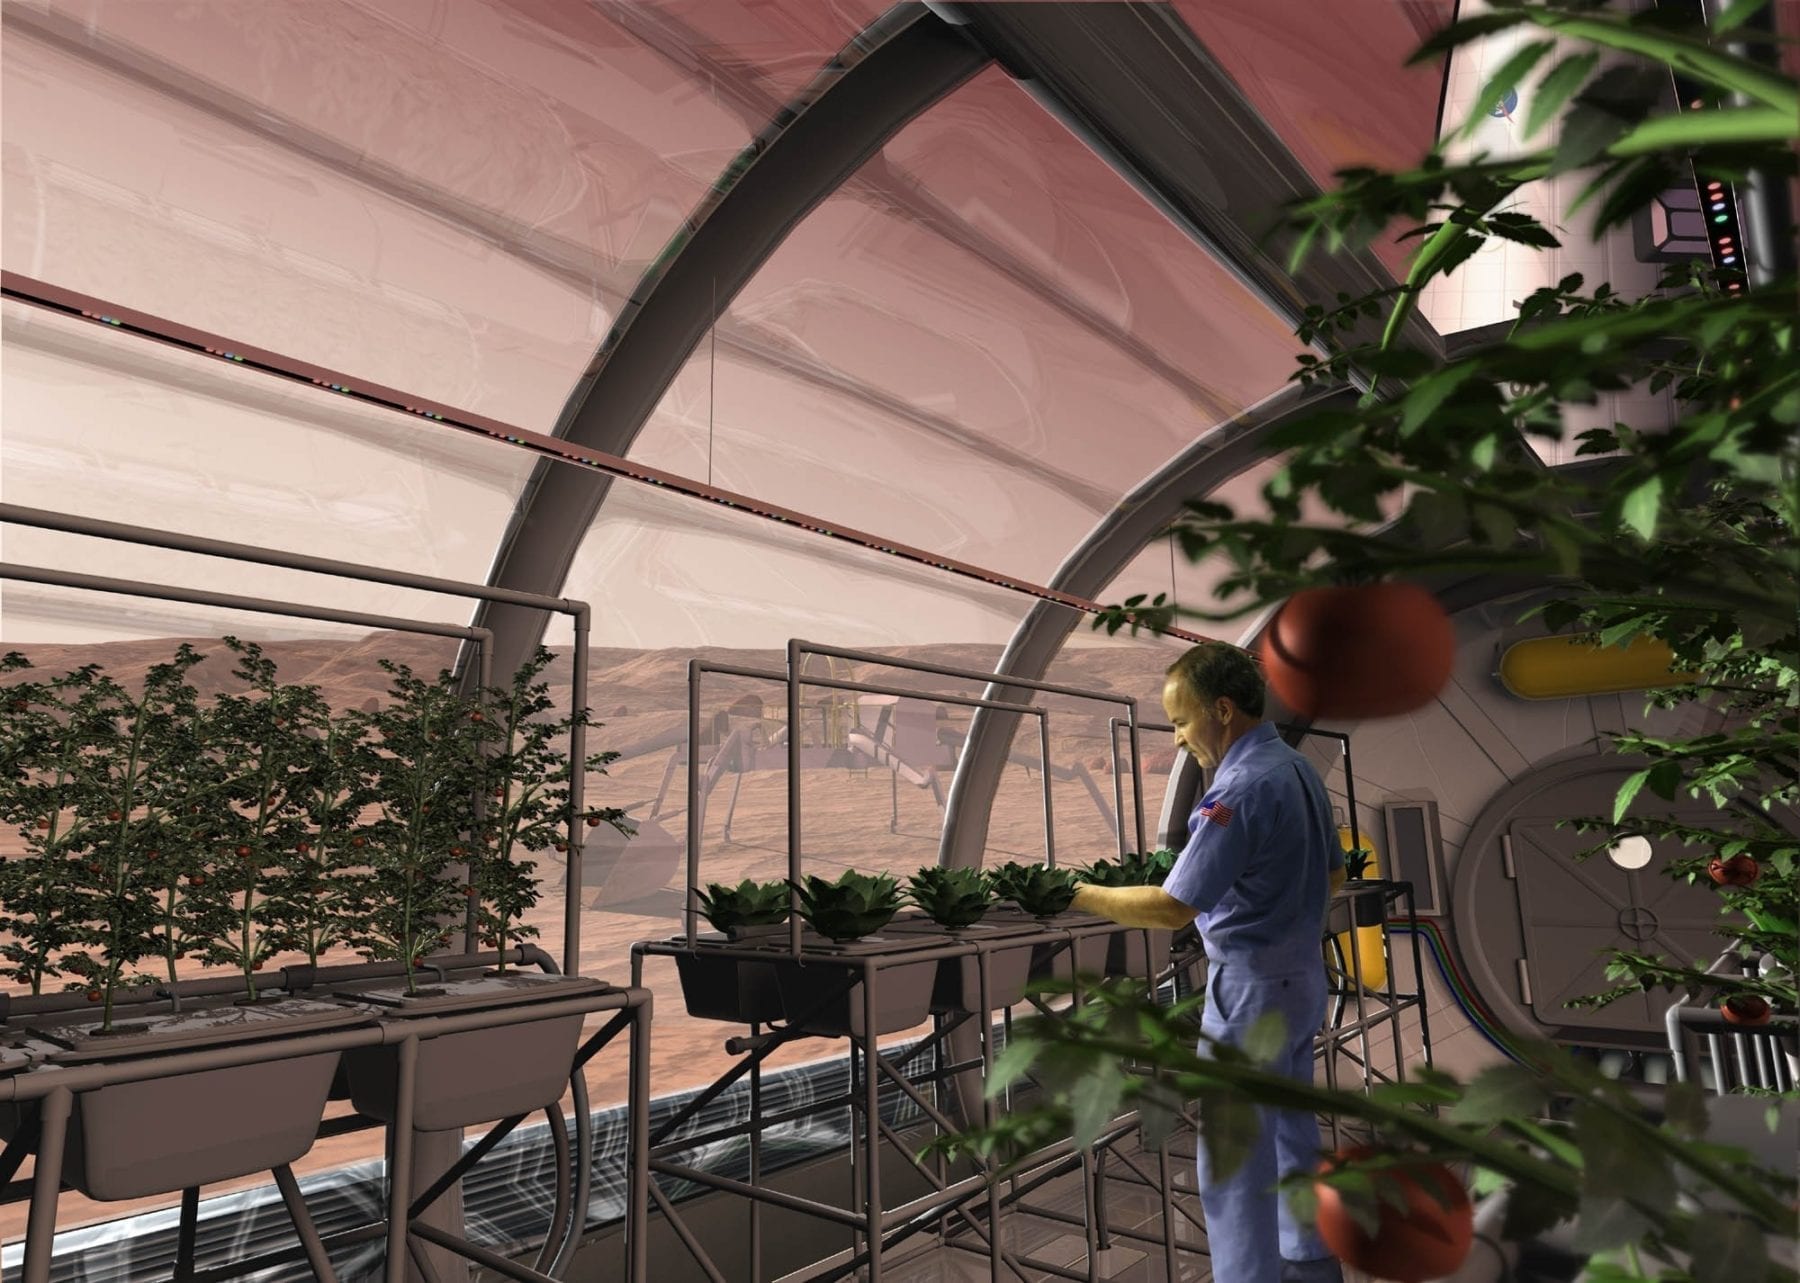 The plant hormone strigolactone could make space farming possible